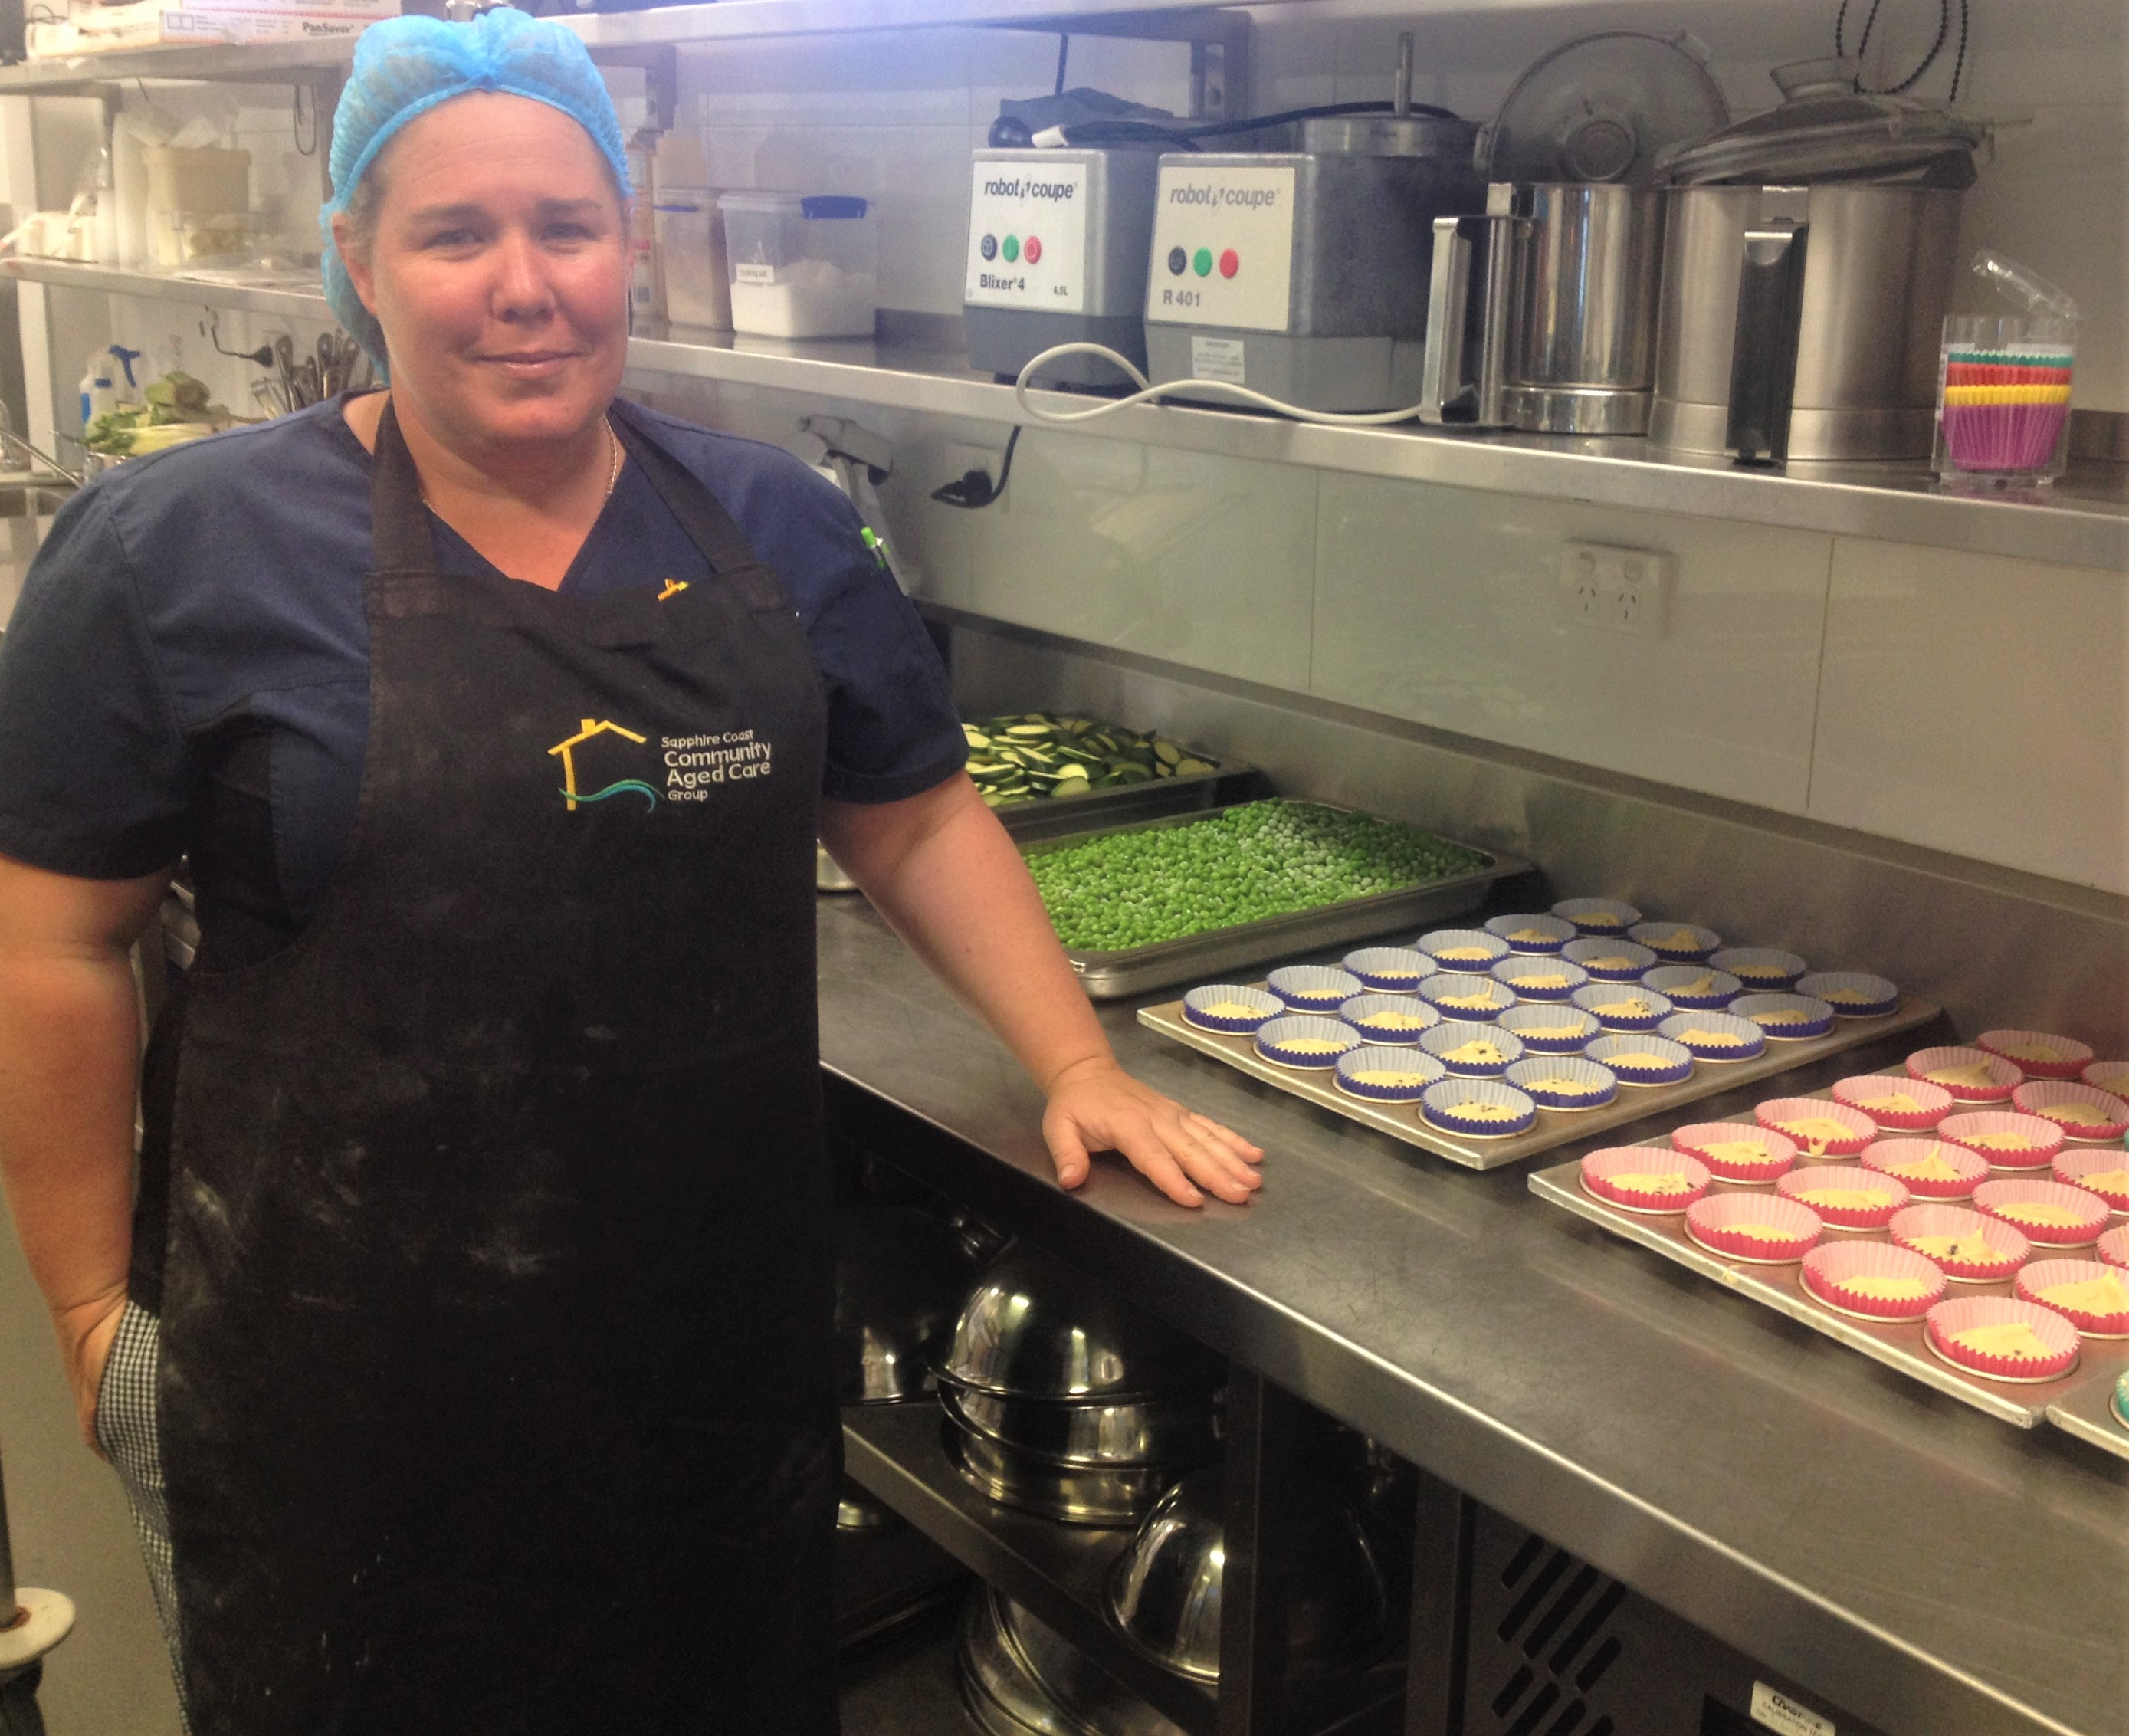 Maggie Beer (and dedicated local staff) inspire shift in menu at Bega nursing home